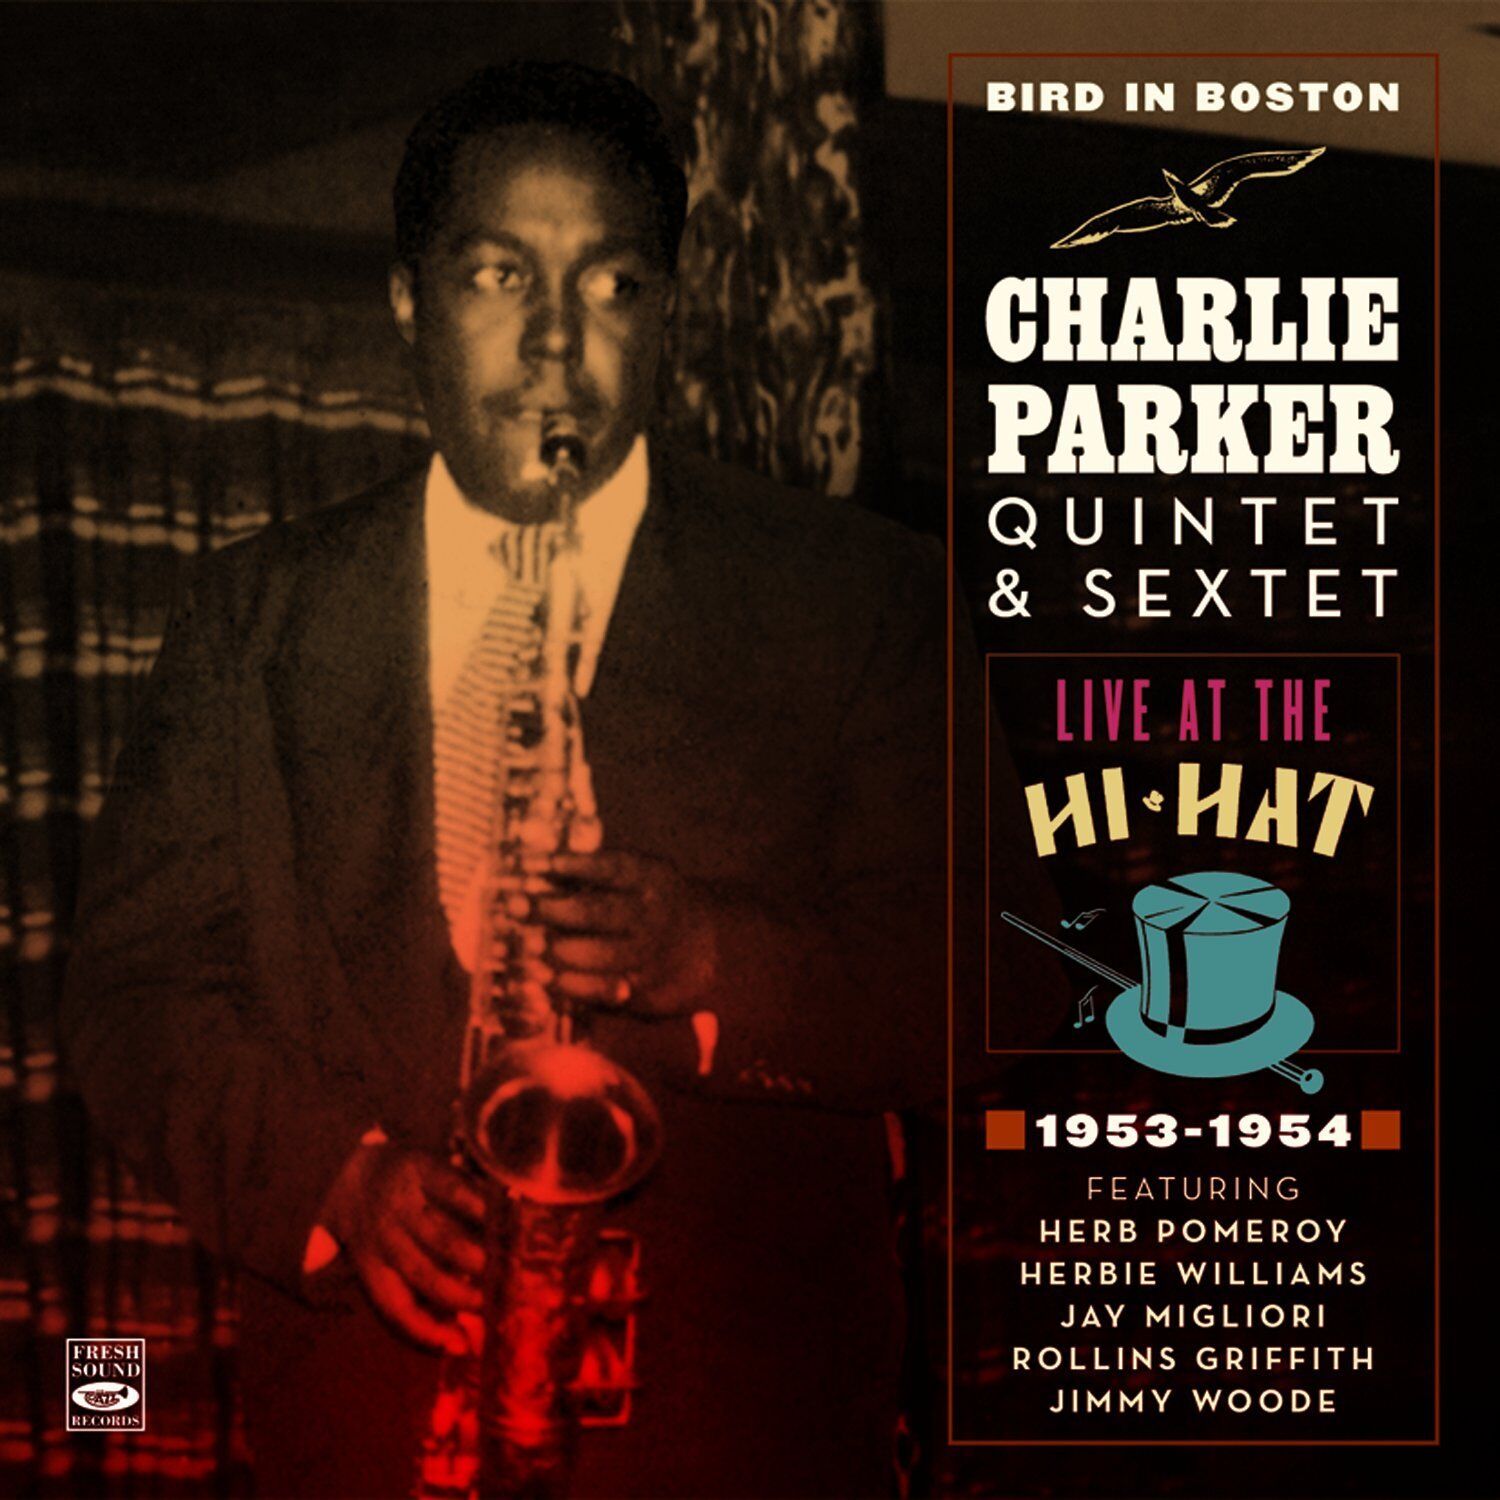 Charlie Parker  BIRD IN BOSTON  LIVE AT THE HI-HAT 1953-1954 (2-CD)